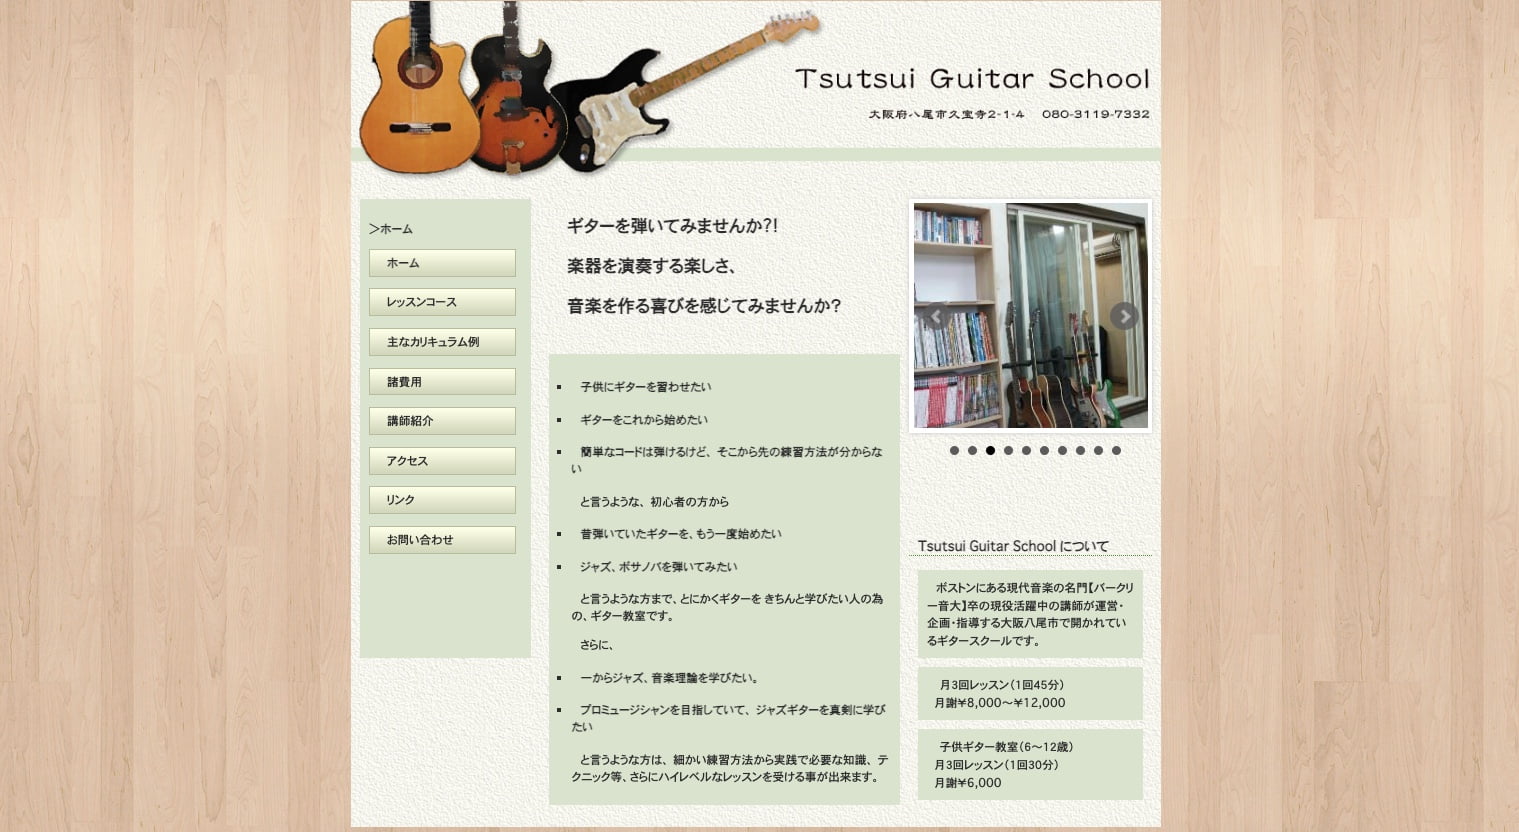 TsutsuiGuitarSchool